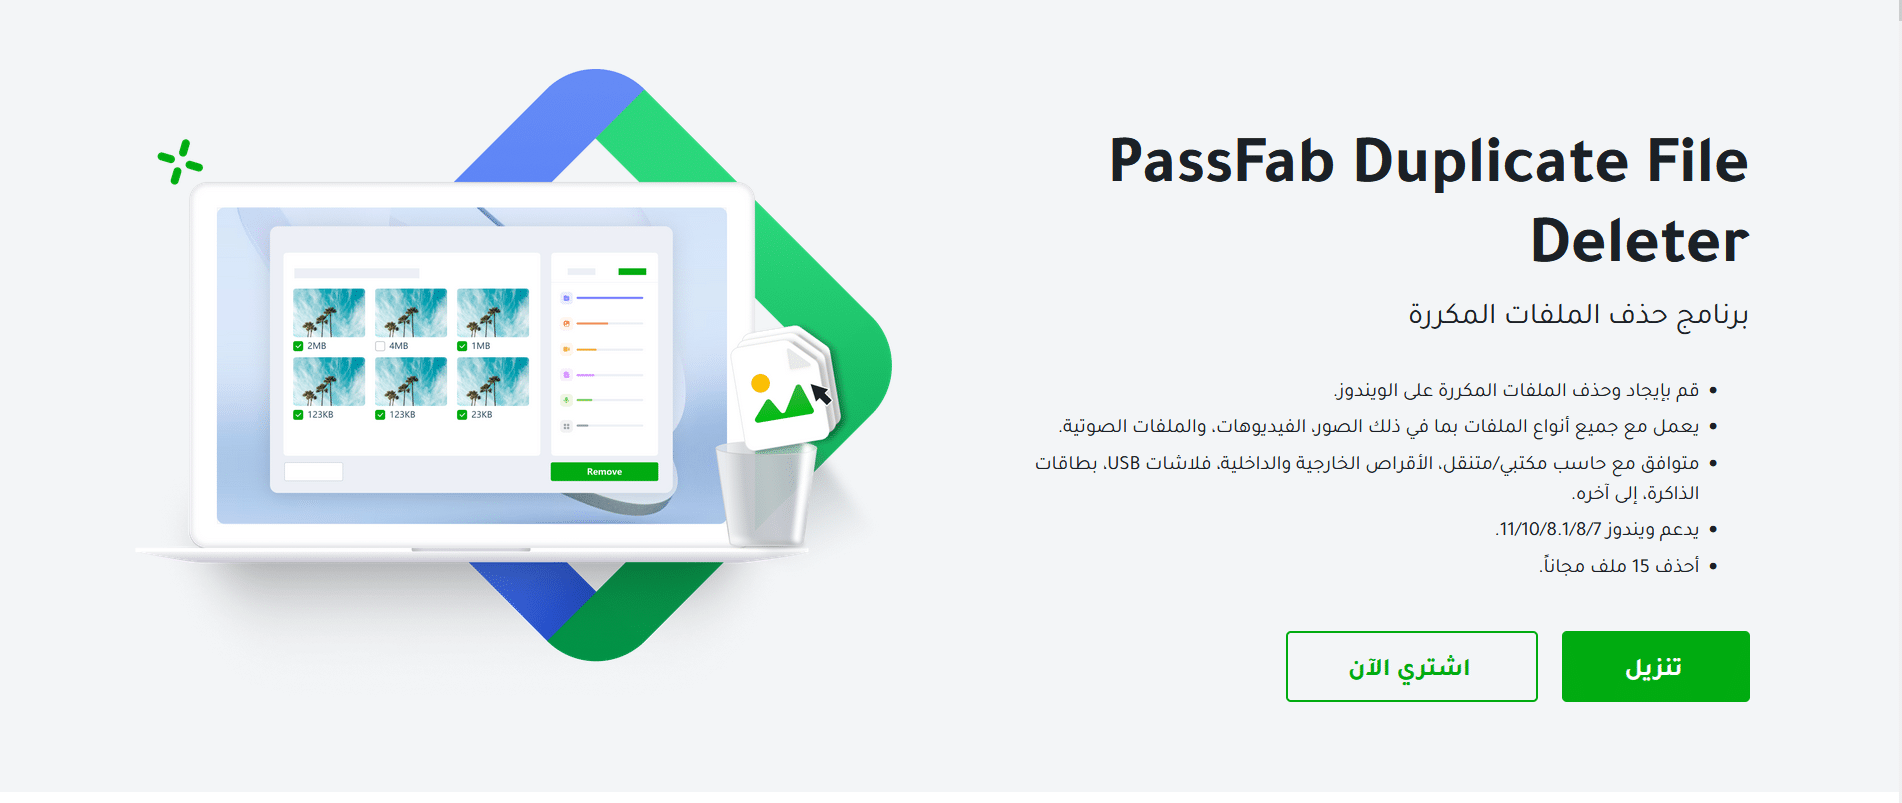 passfab duplicate file deleter review